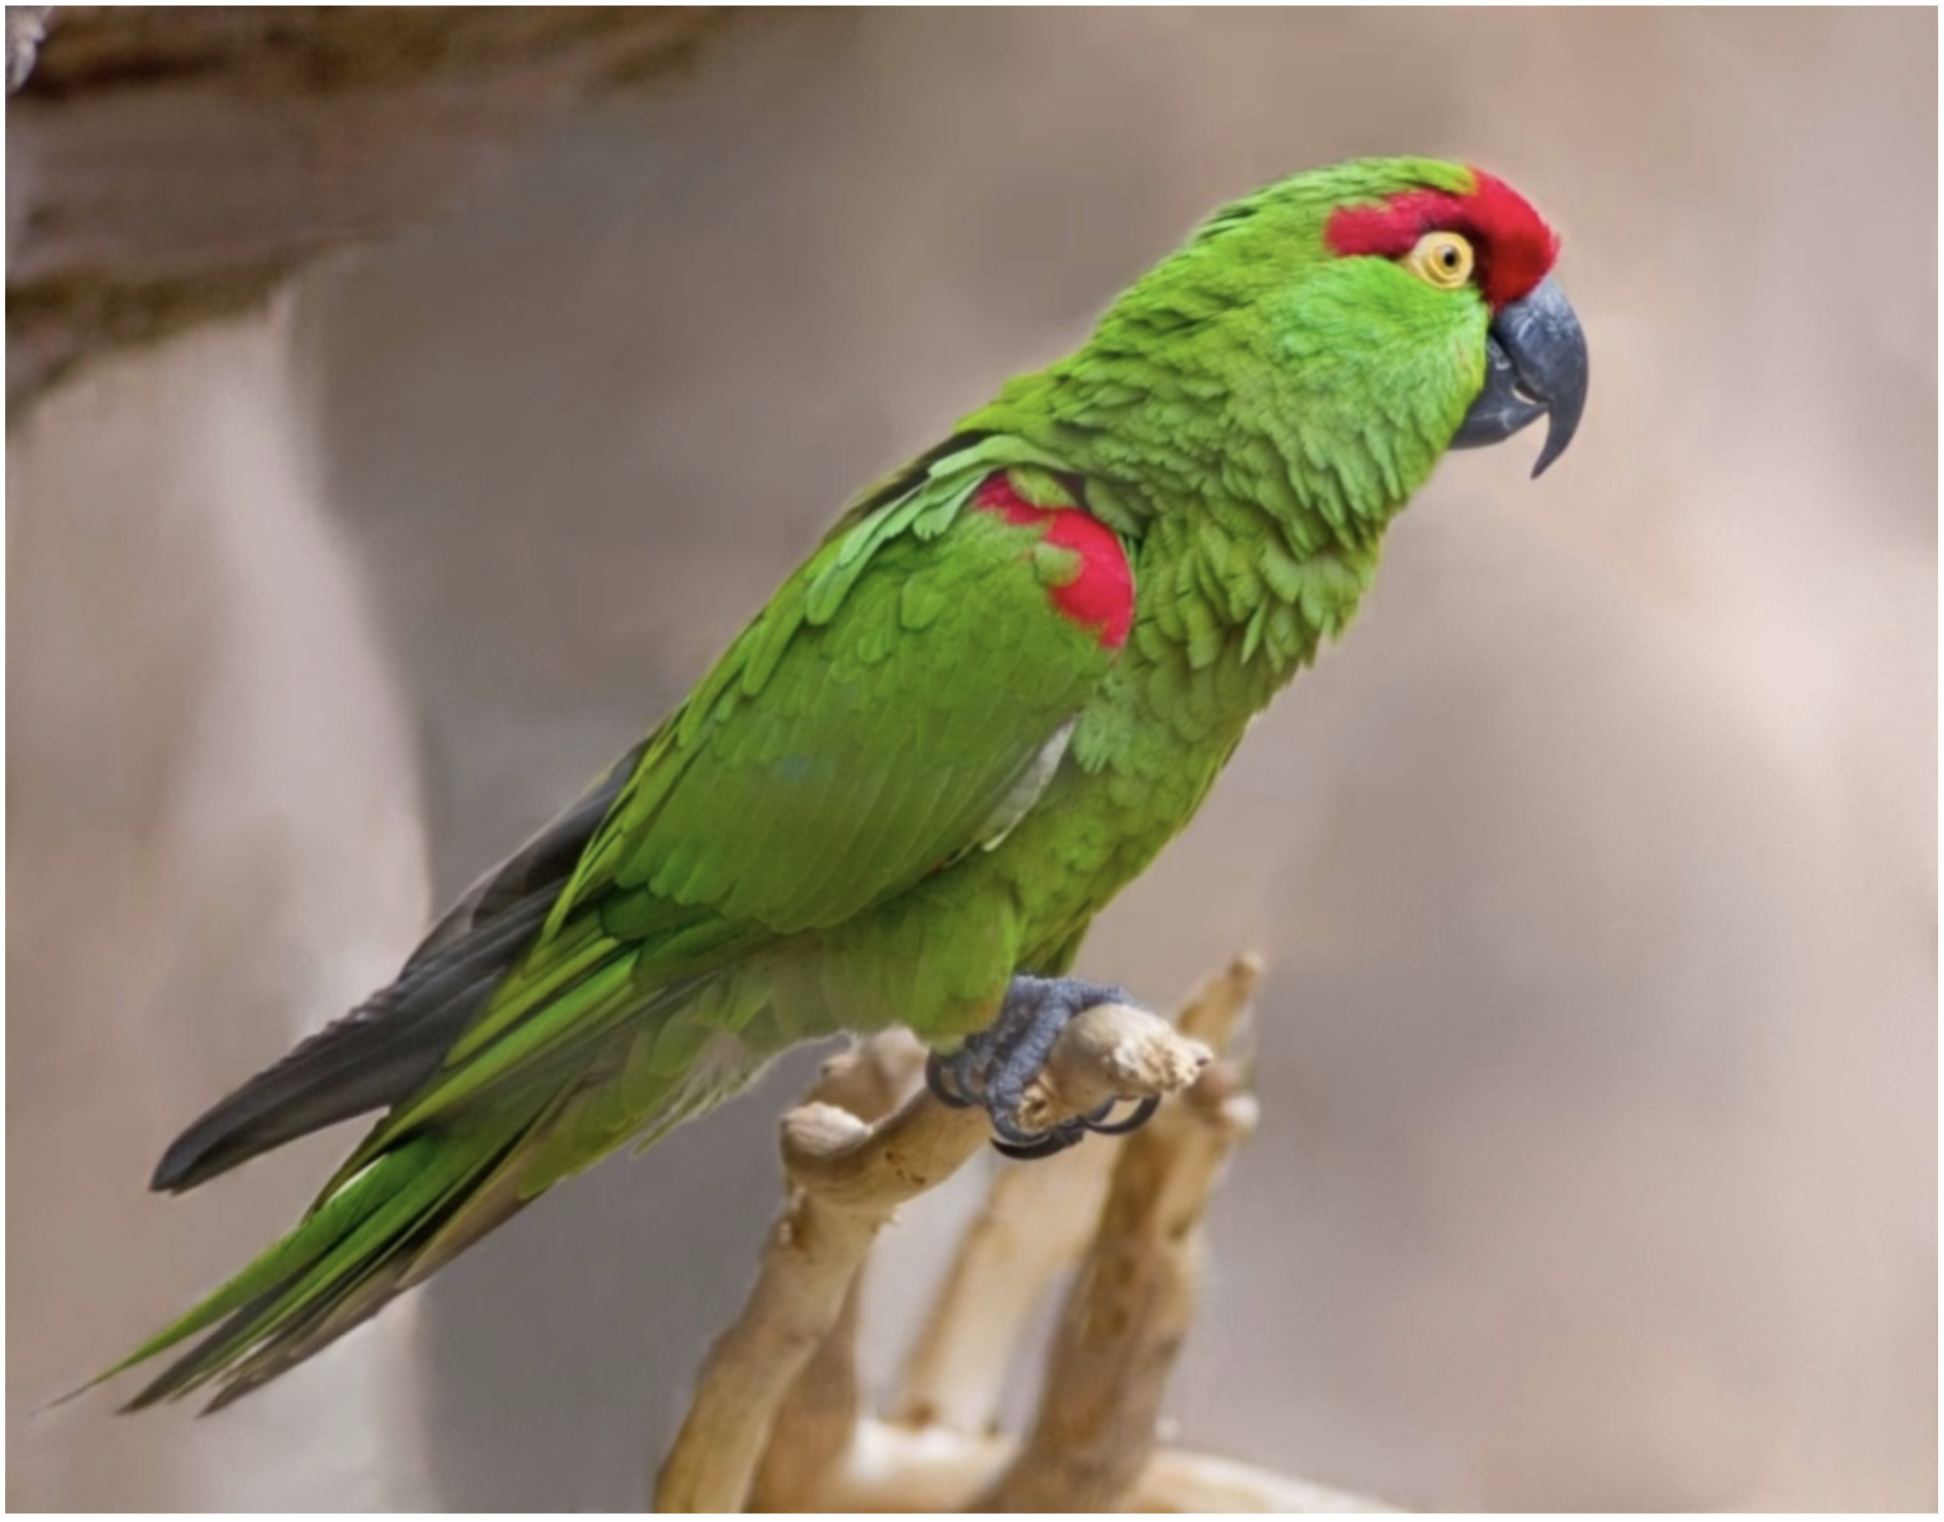 Old Bone Links Lost American Parrot to Ancient Indigenous Bird Trade, Jackson School of Geosciences